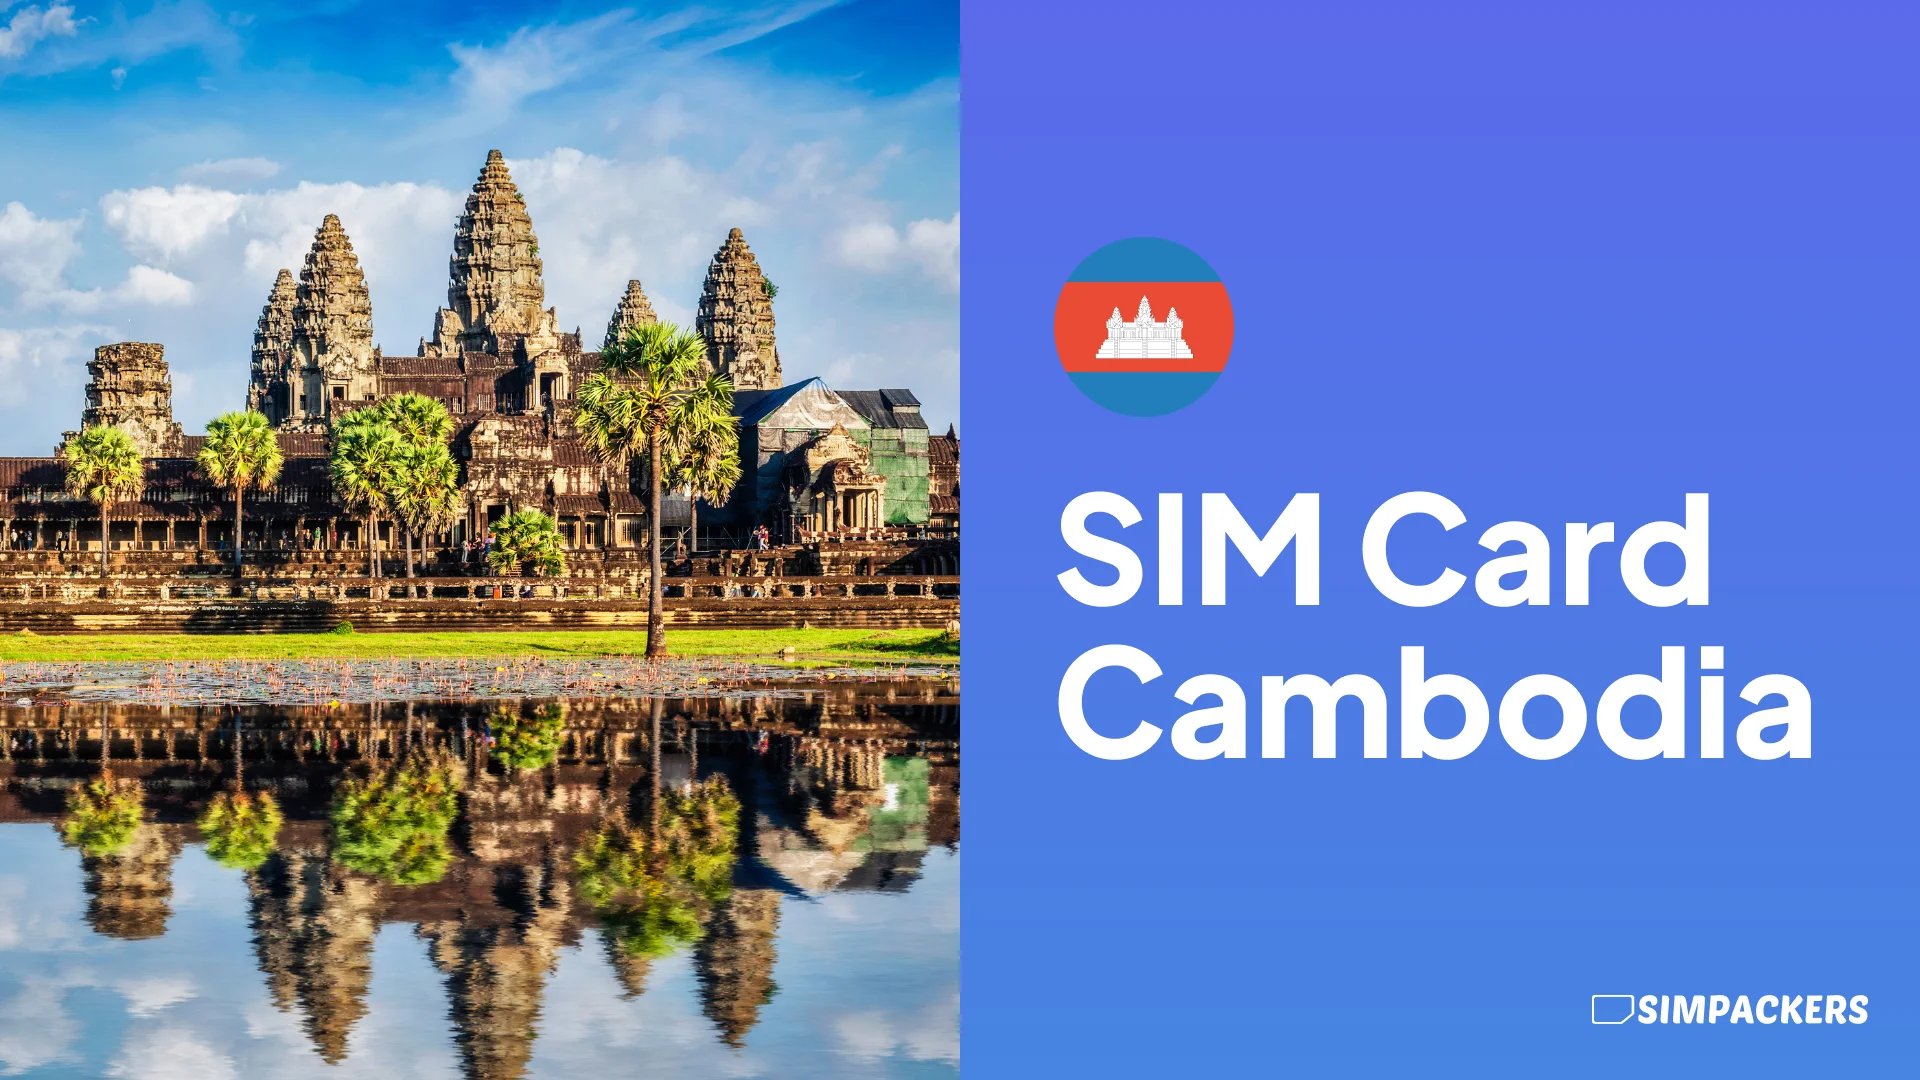 EN/FEATURED_IMAGES/sim-card-cambodia.webp